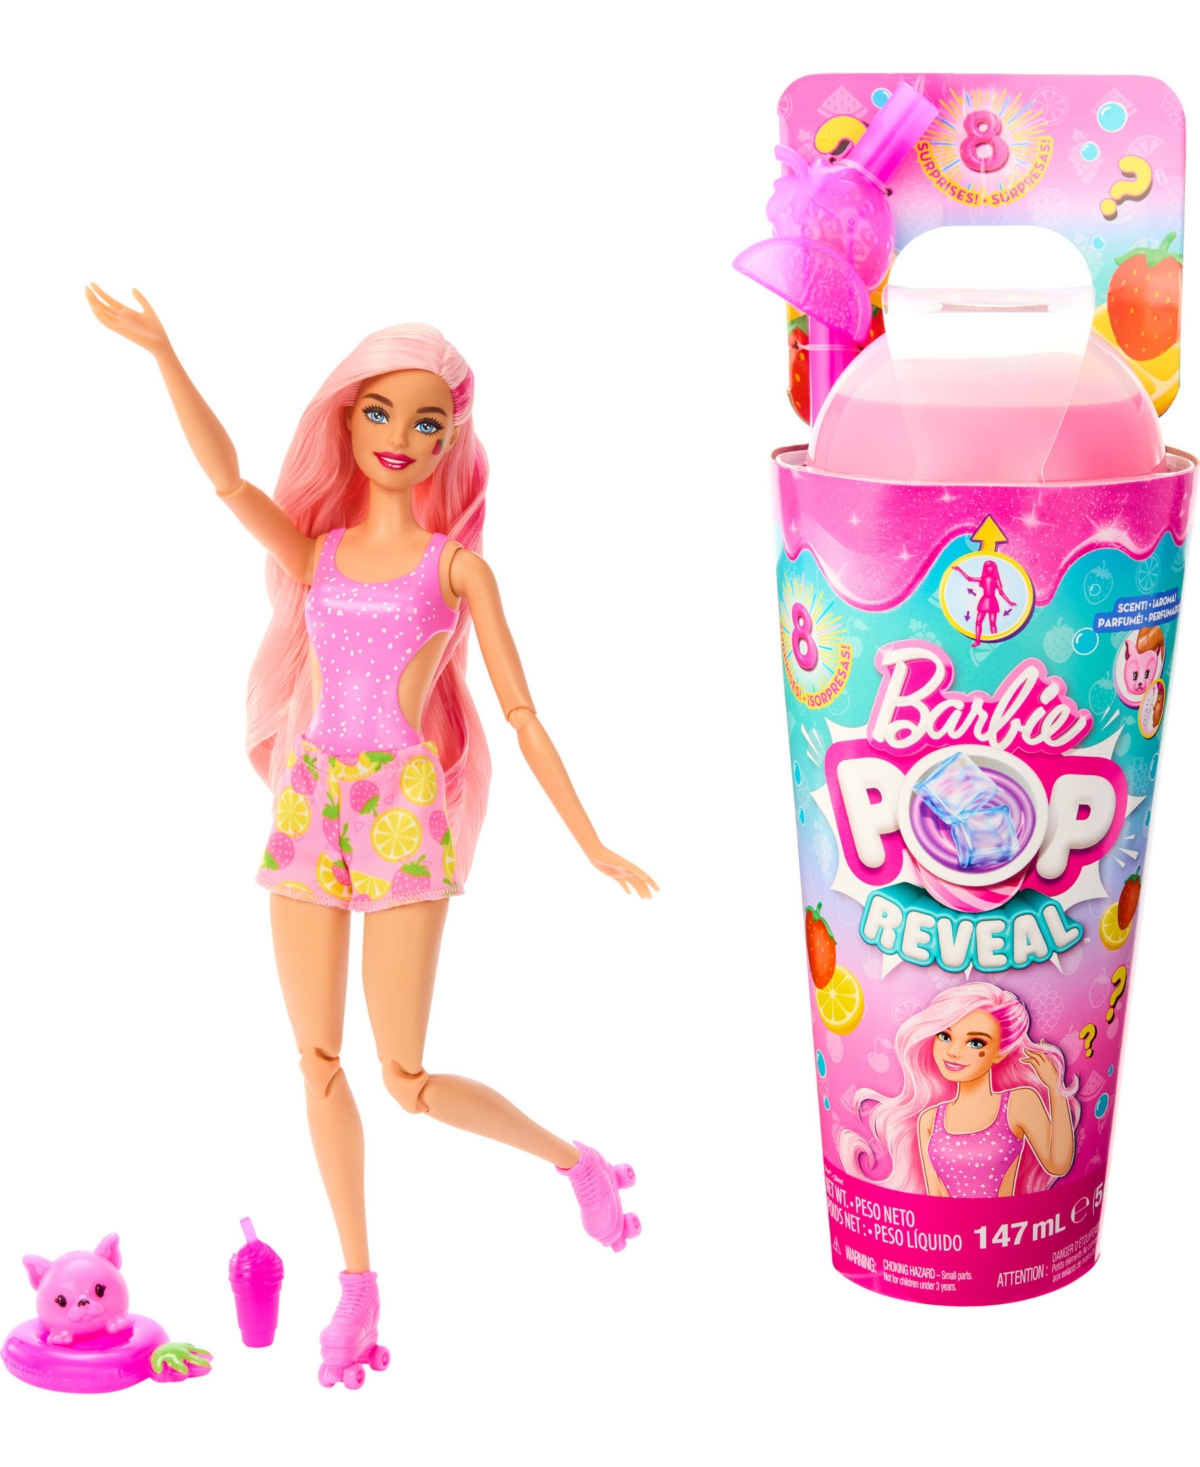 Barbie Kids' Pop Reveal Fruit Series Strawberry Lemonade Doll, 8 Surprises Include Pet, Slime, Scent & Color Chan In Multi-color